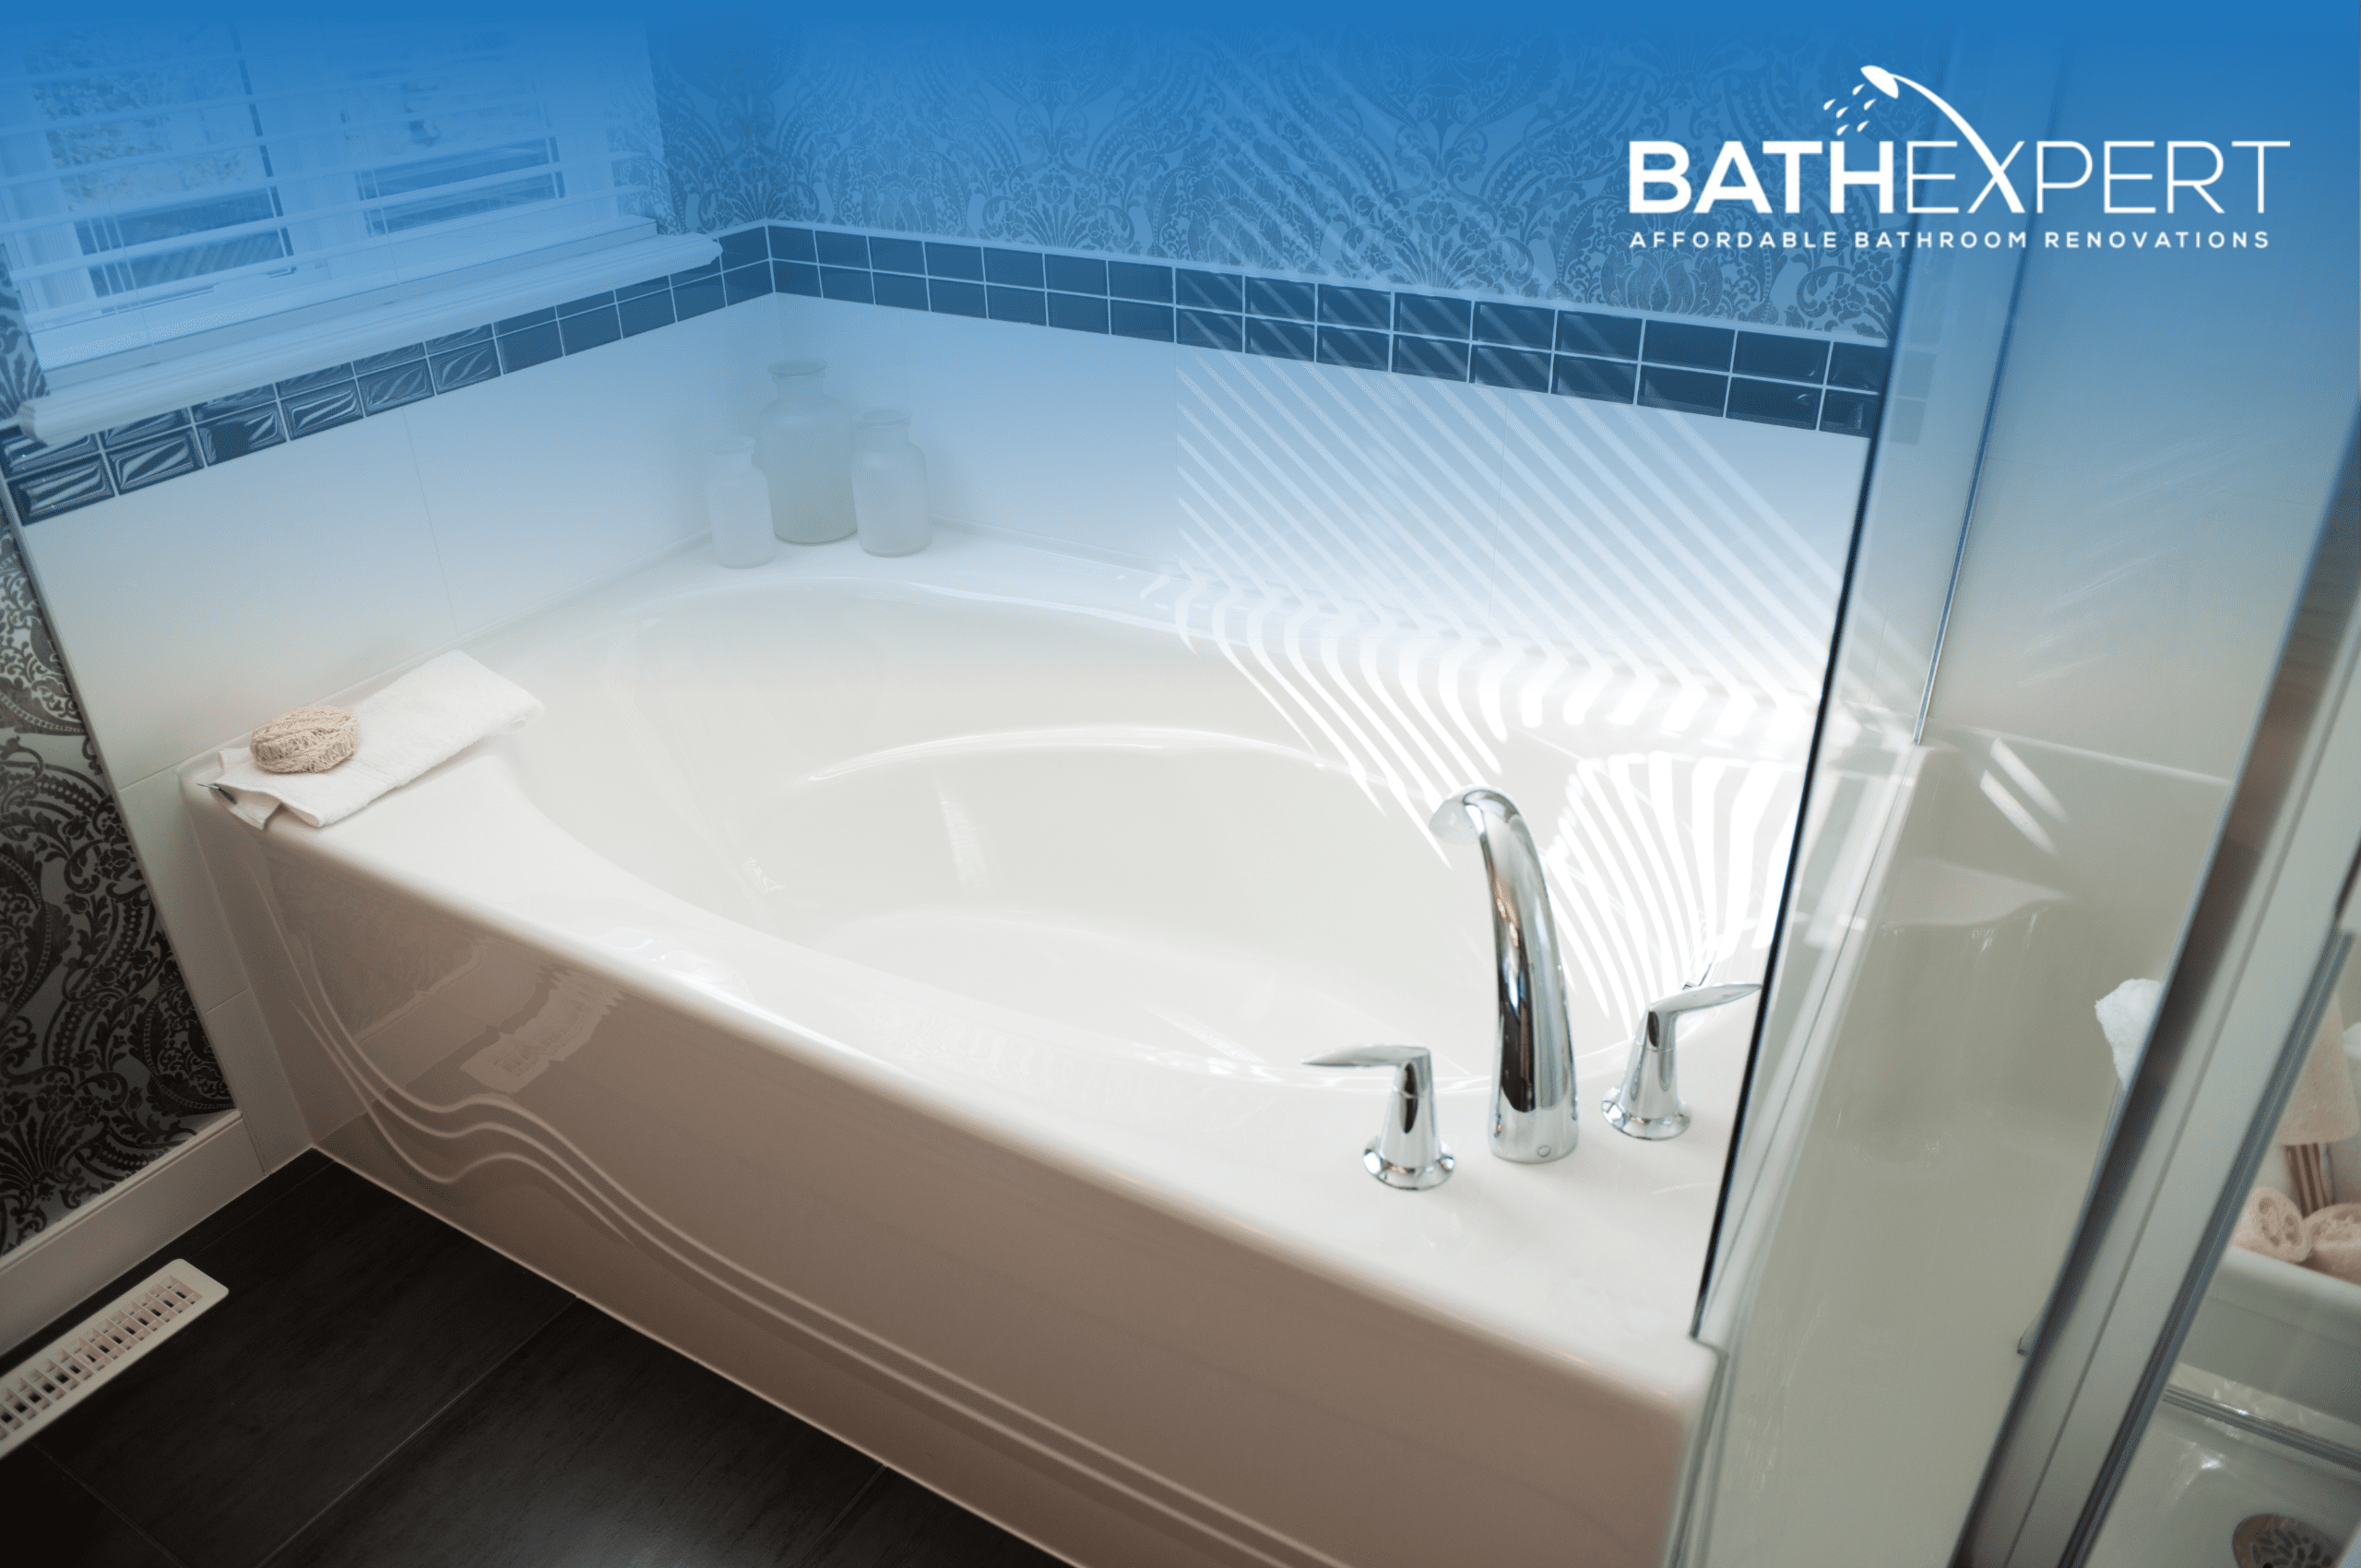 Choosing the Perfect Bathtub for Your Bathroom Renovation